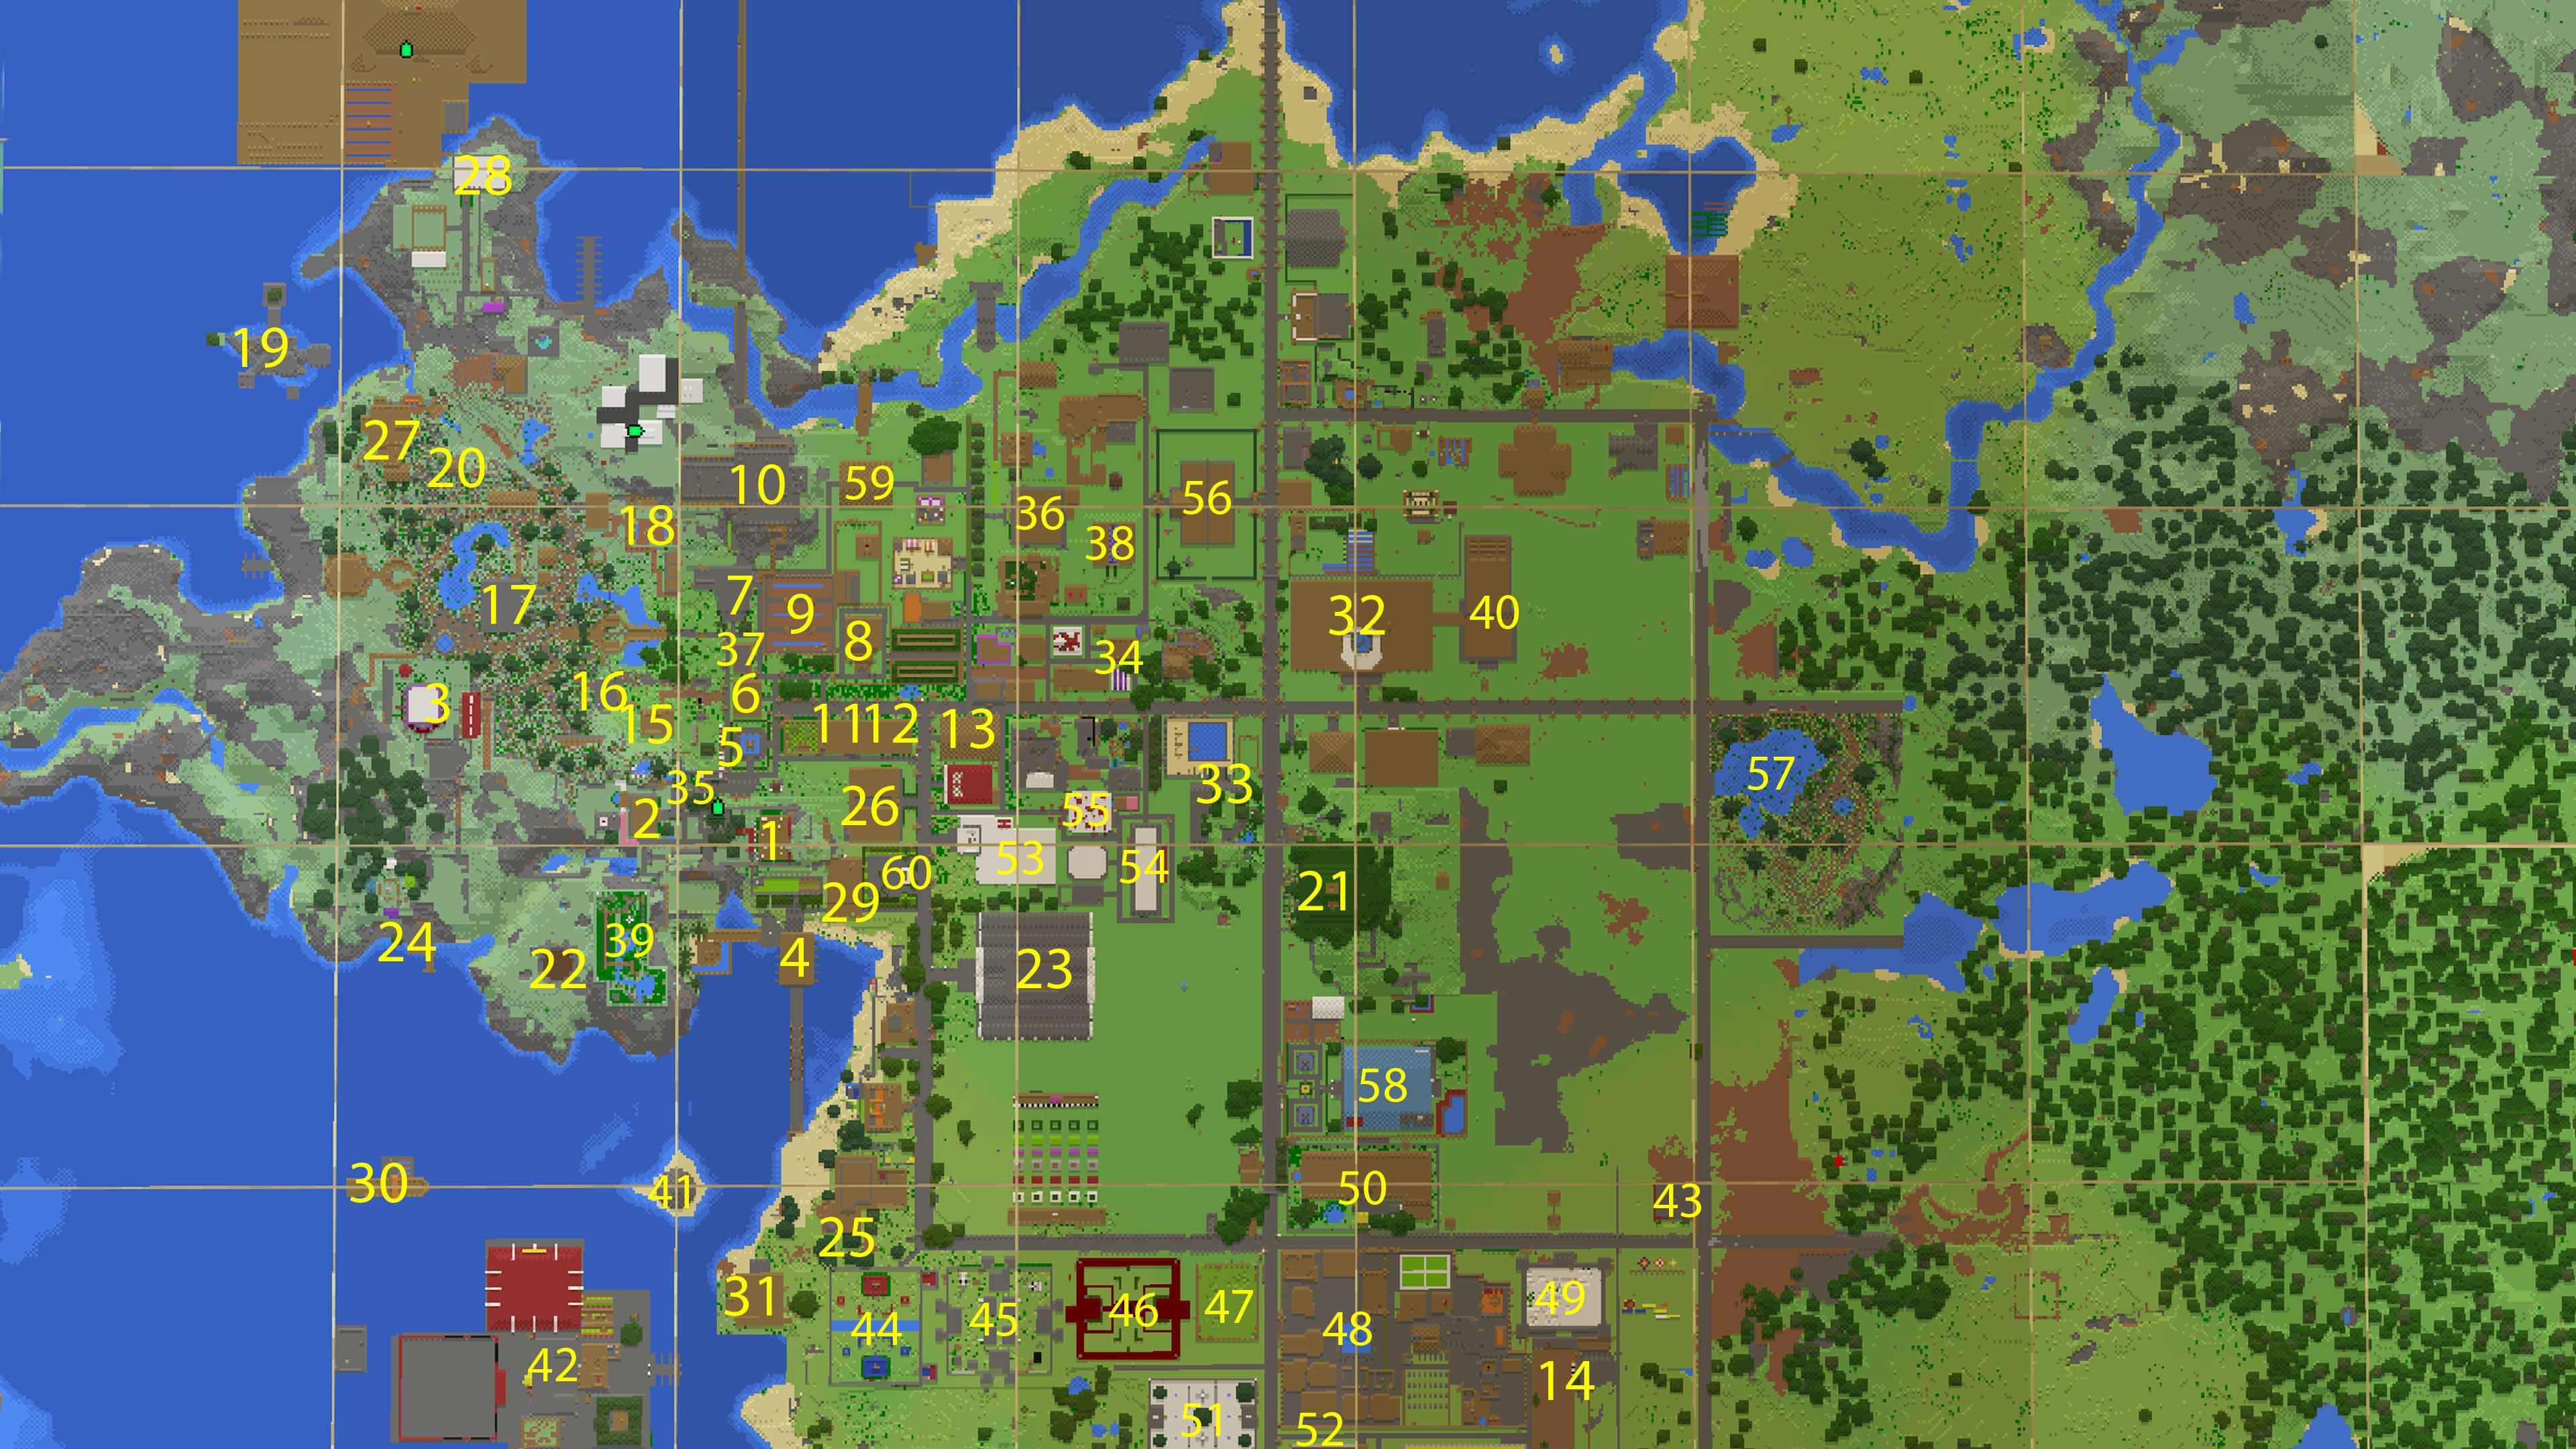 Minecraft Realm Map Skycaptin5lol, minecraft realm map skycaptin5lol pic, d...